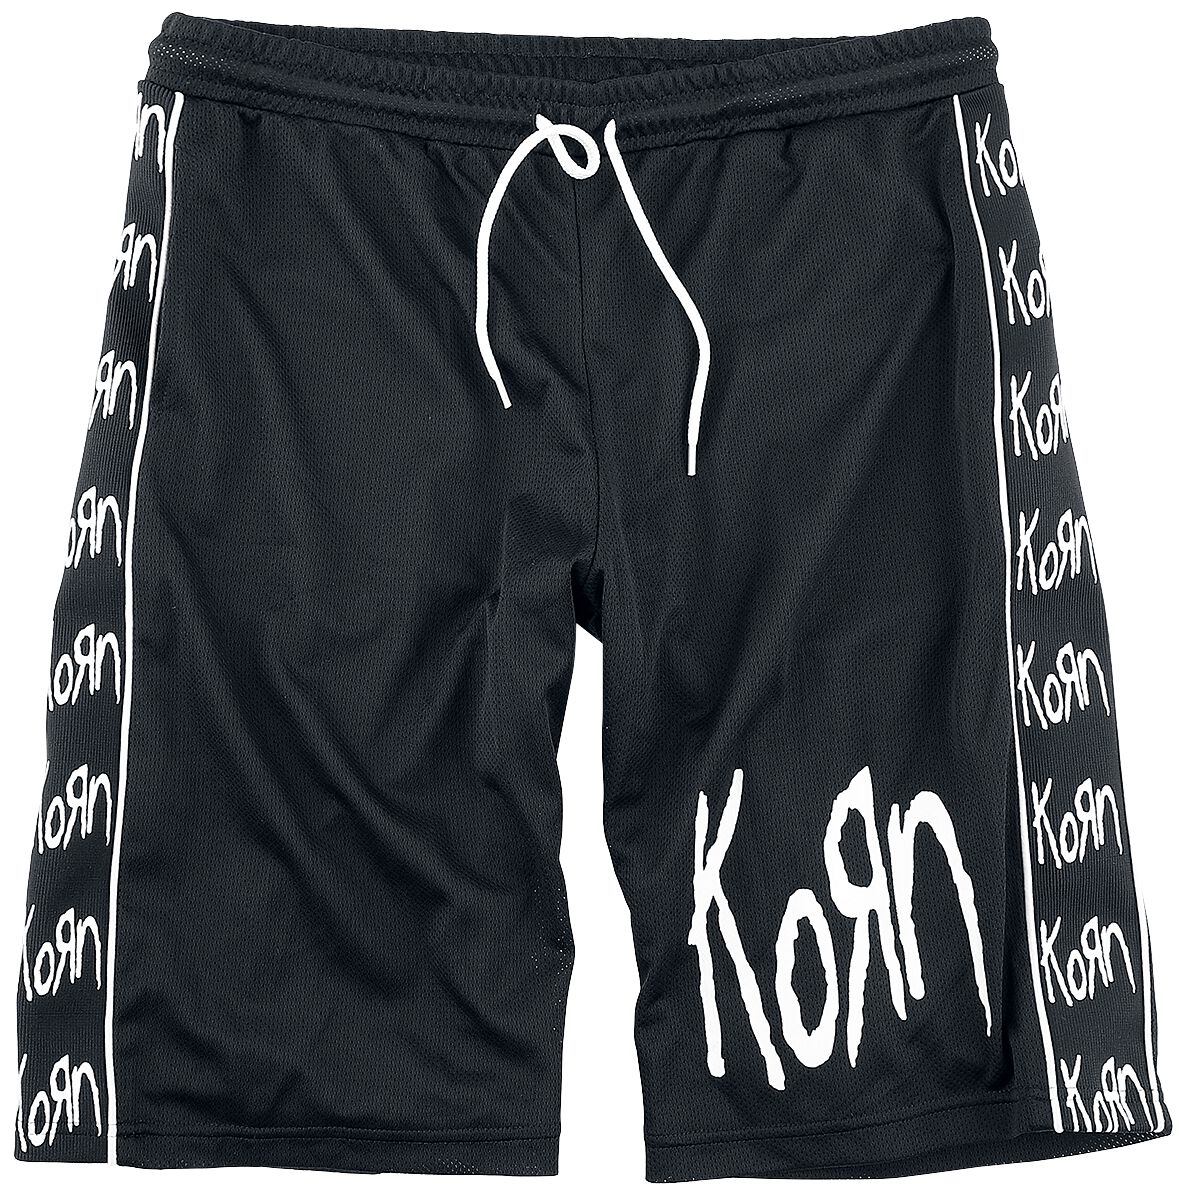 Korn EMP Signature Collection Shorts black white